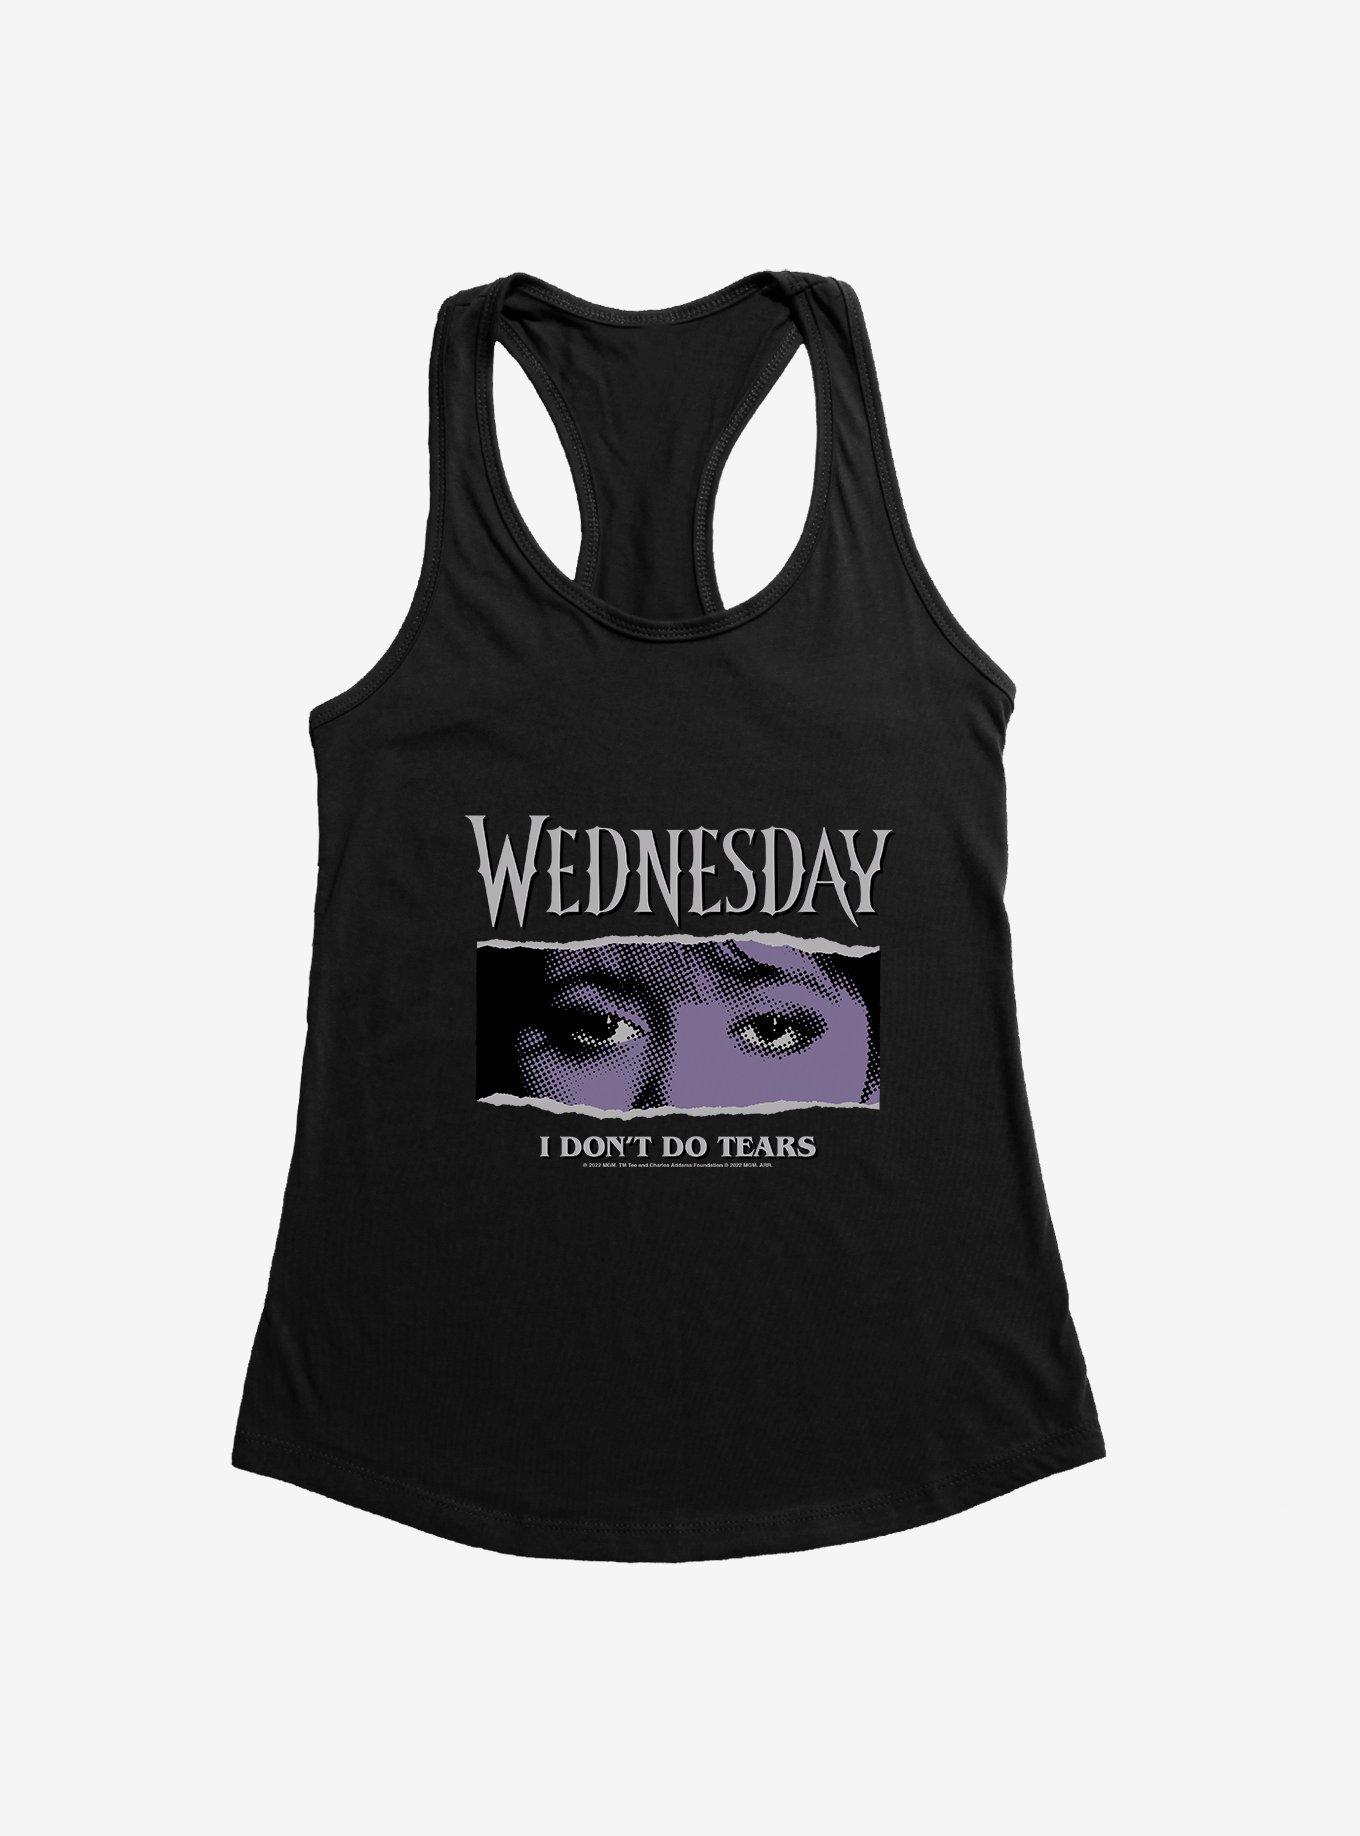 Wednesday Eyes Don't Do Tears Girls Tank, BLACK, hi-res